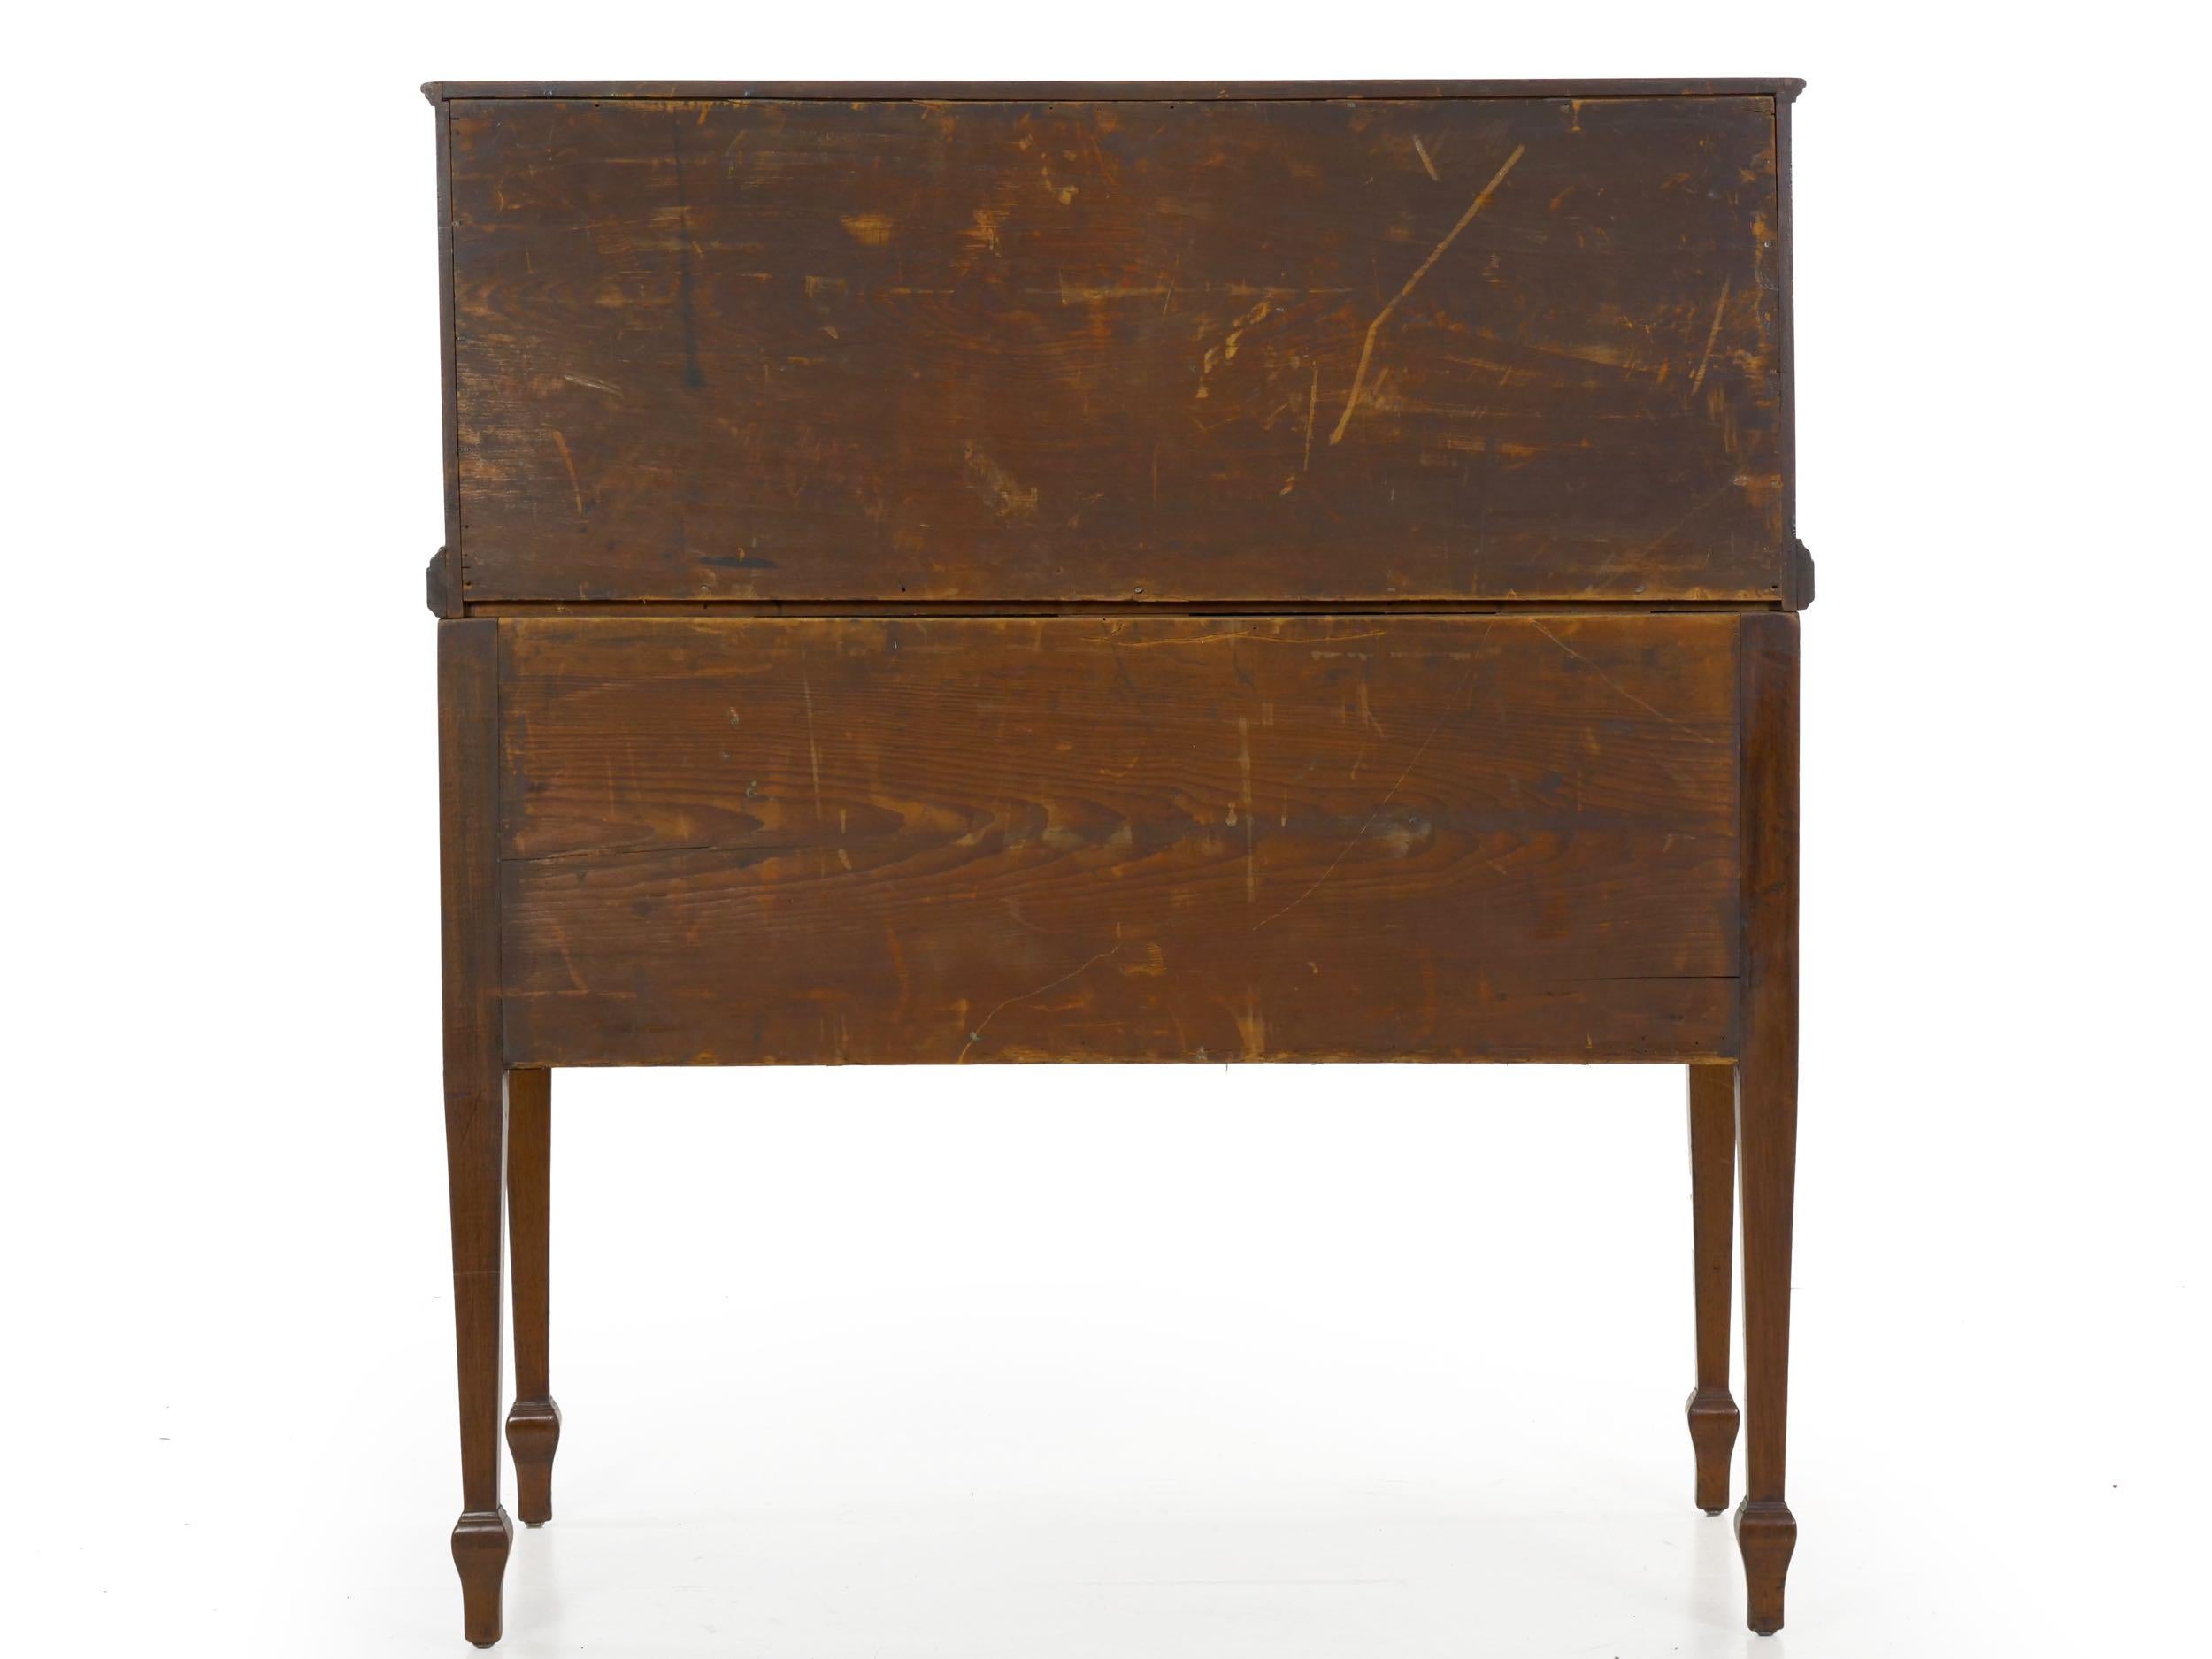 Brass American Federal Inlaid Mahogany Antique Secretary Writing Desk, circa 1790-1810